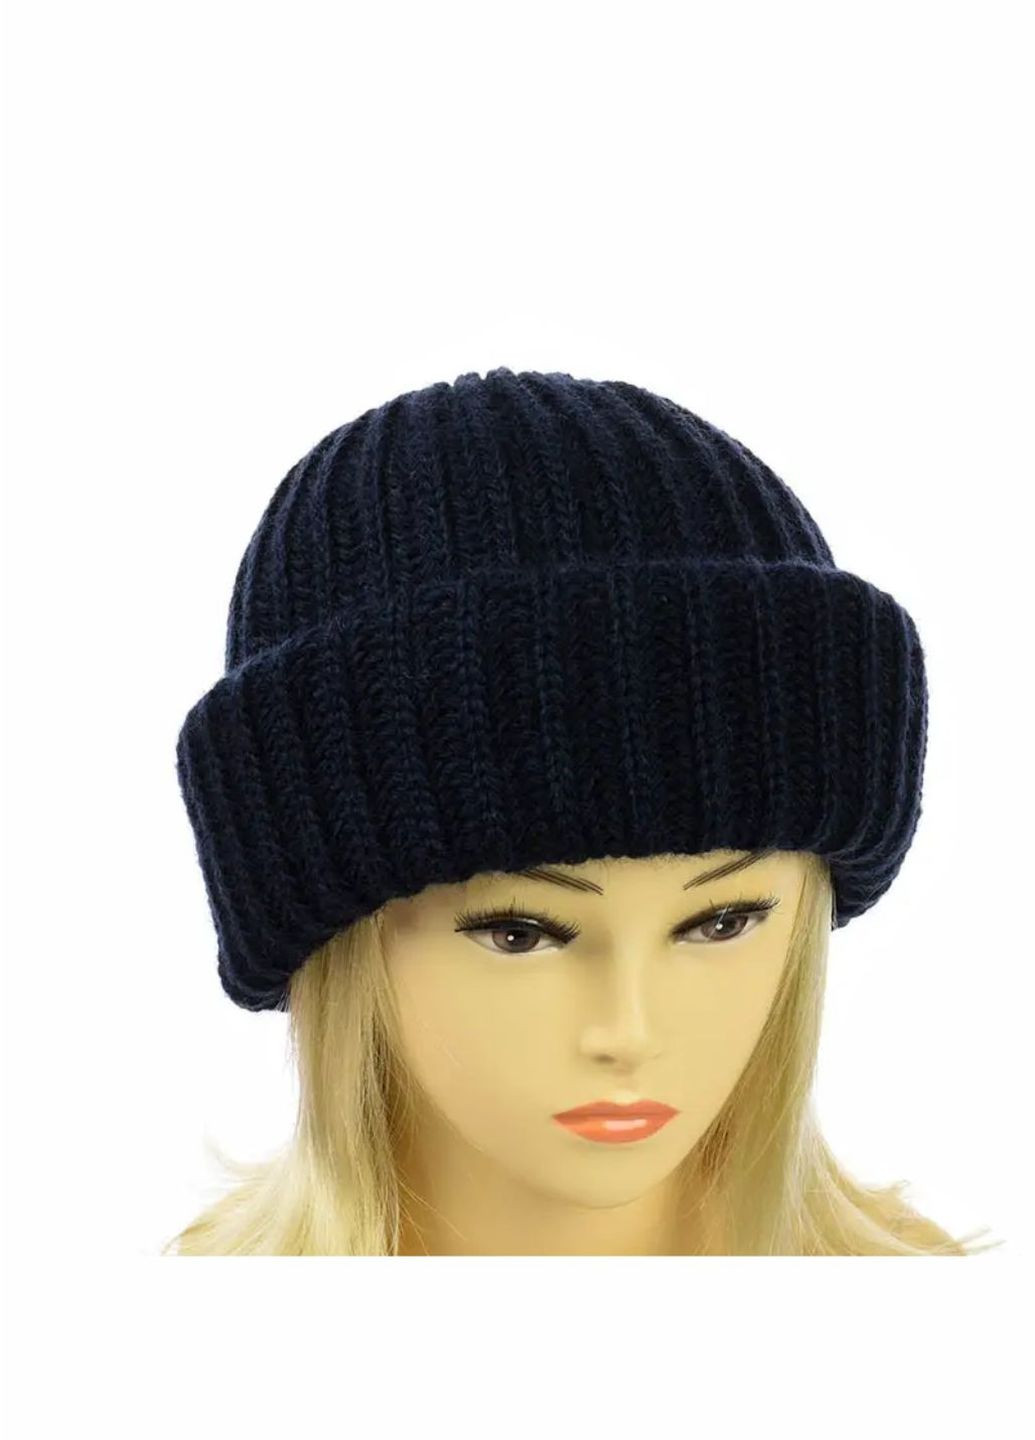 Жіночий зимовий комплект Барбара шапка + хомут No Brand набор барбара (276260550)